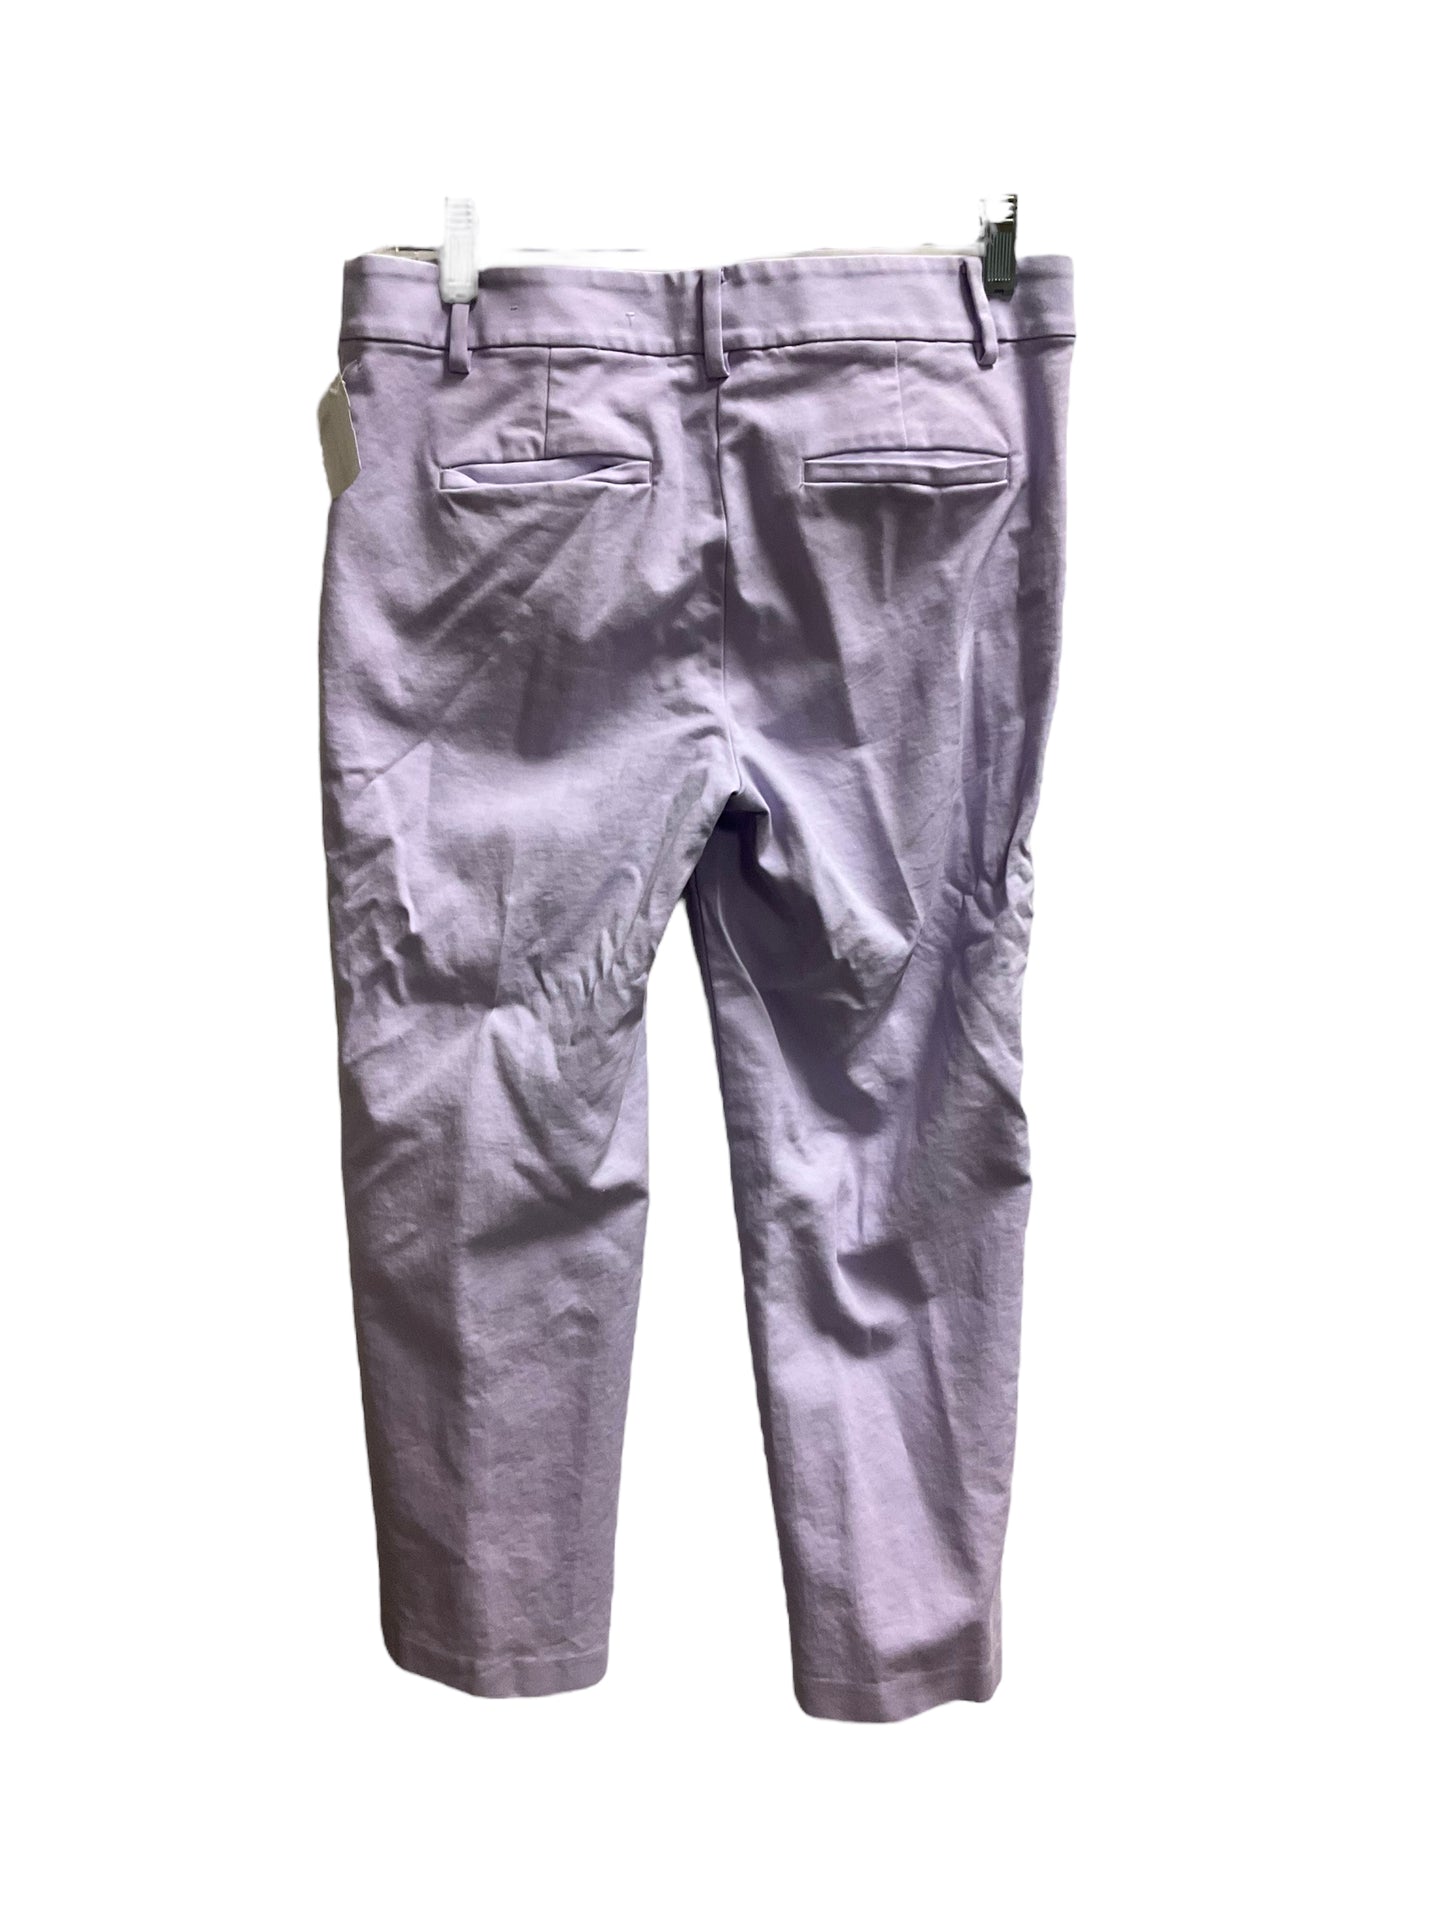 Pants Cropped By Loft  Size: 4